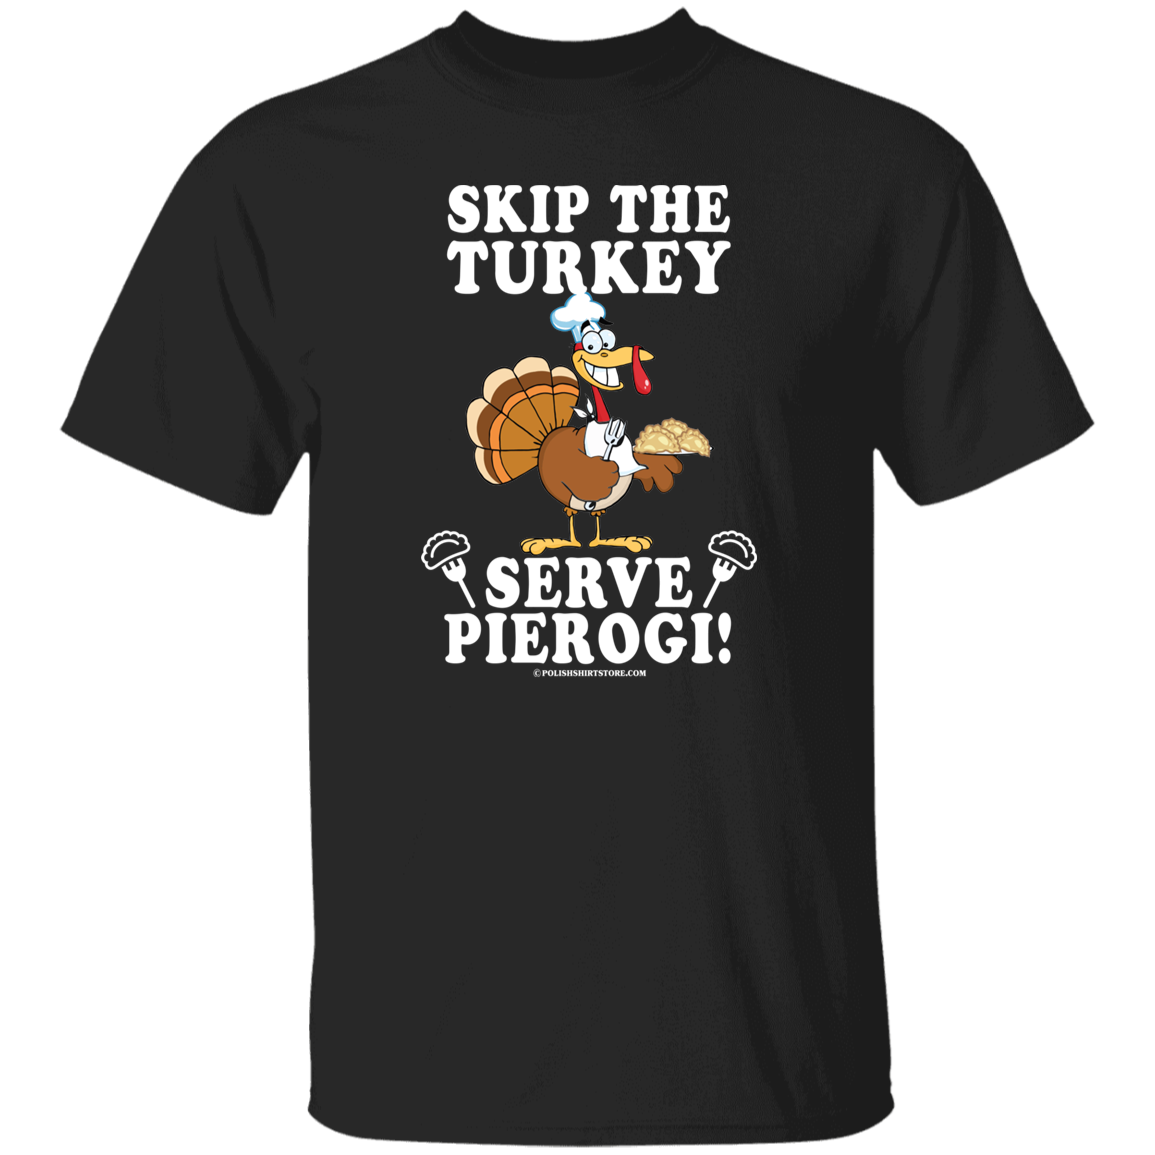 Skip The Turkey Serve Pierogi Apparel CustomCat G500 5.3 oz. T-Shirt Black S